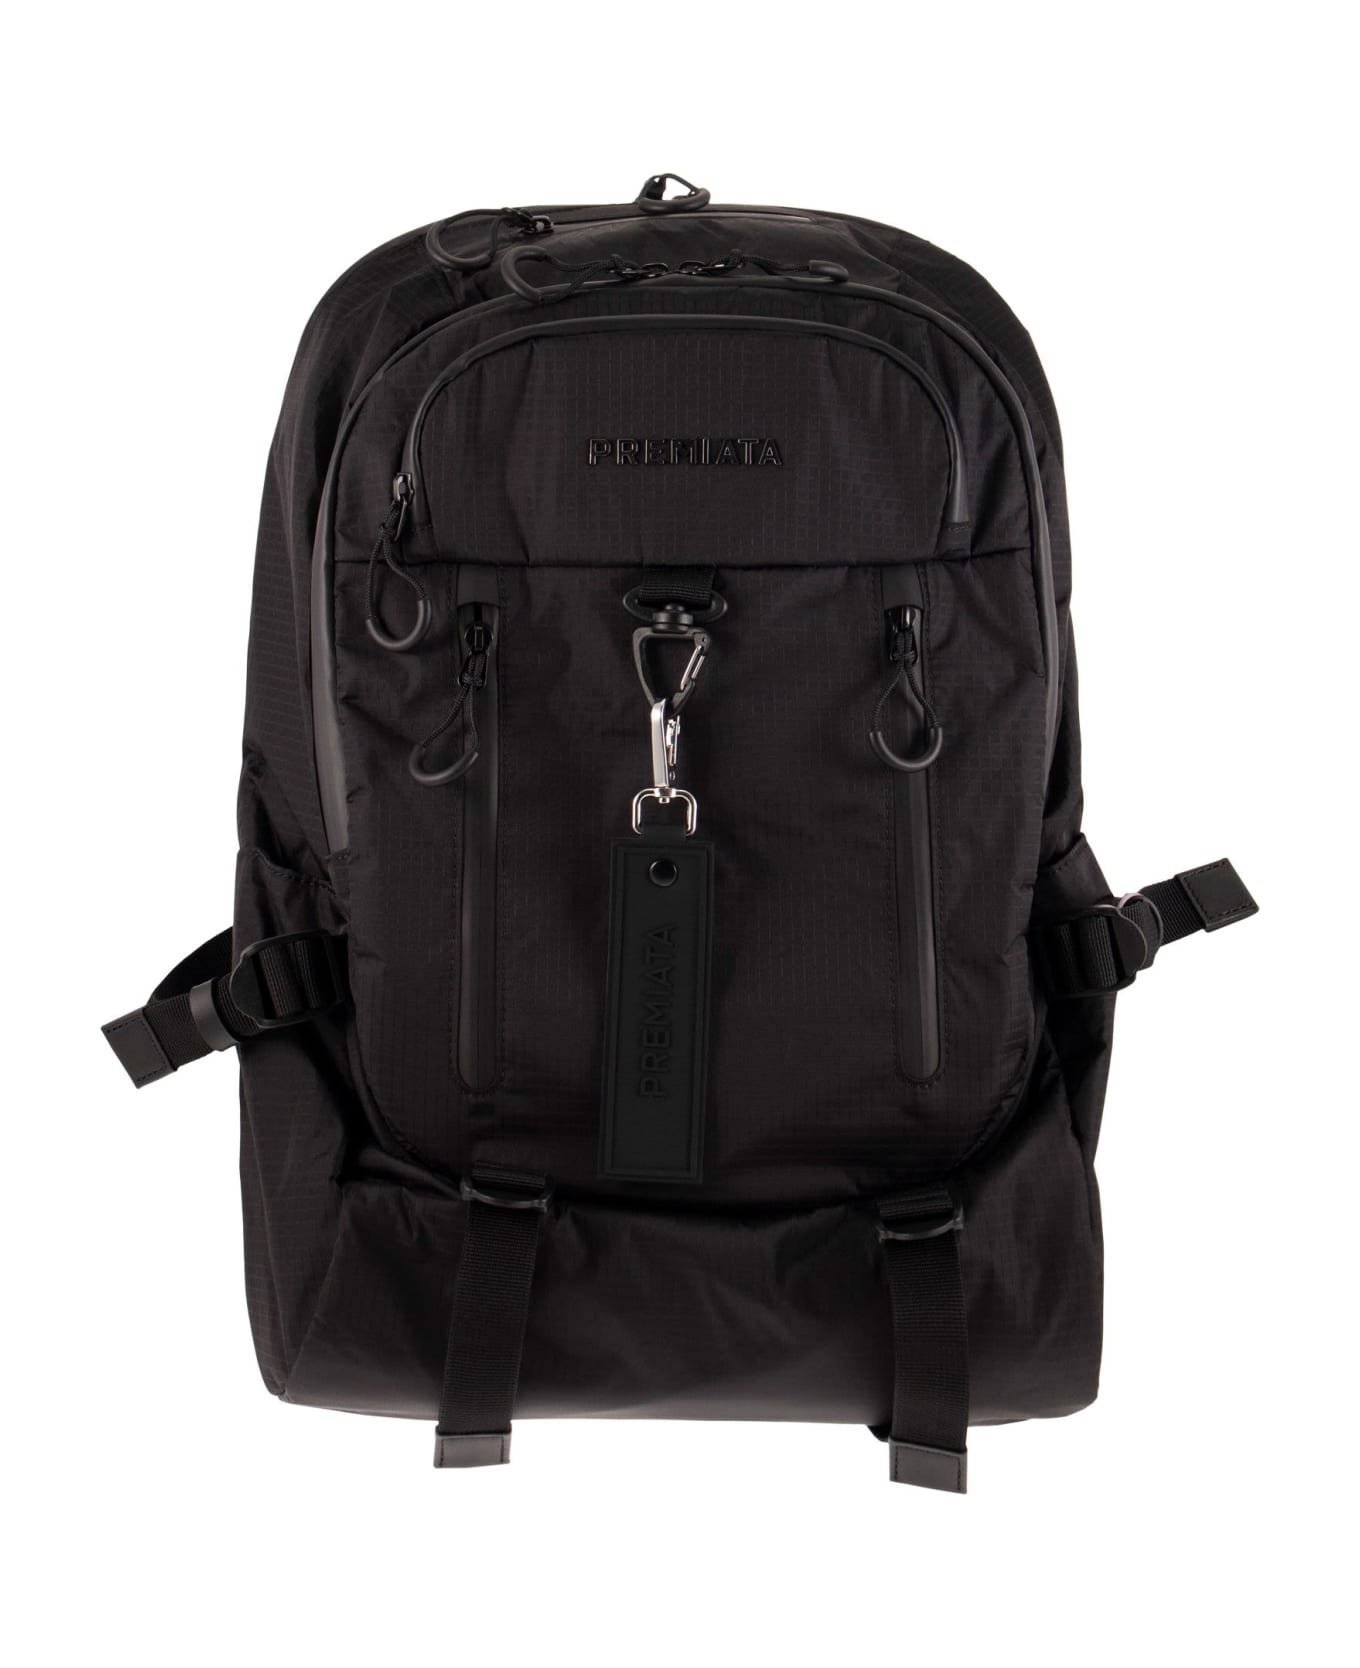 Premiata Ventura - Backpack With Hooks - Black